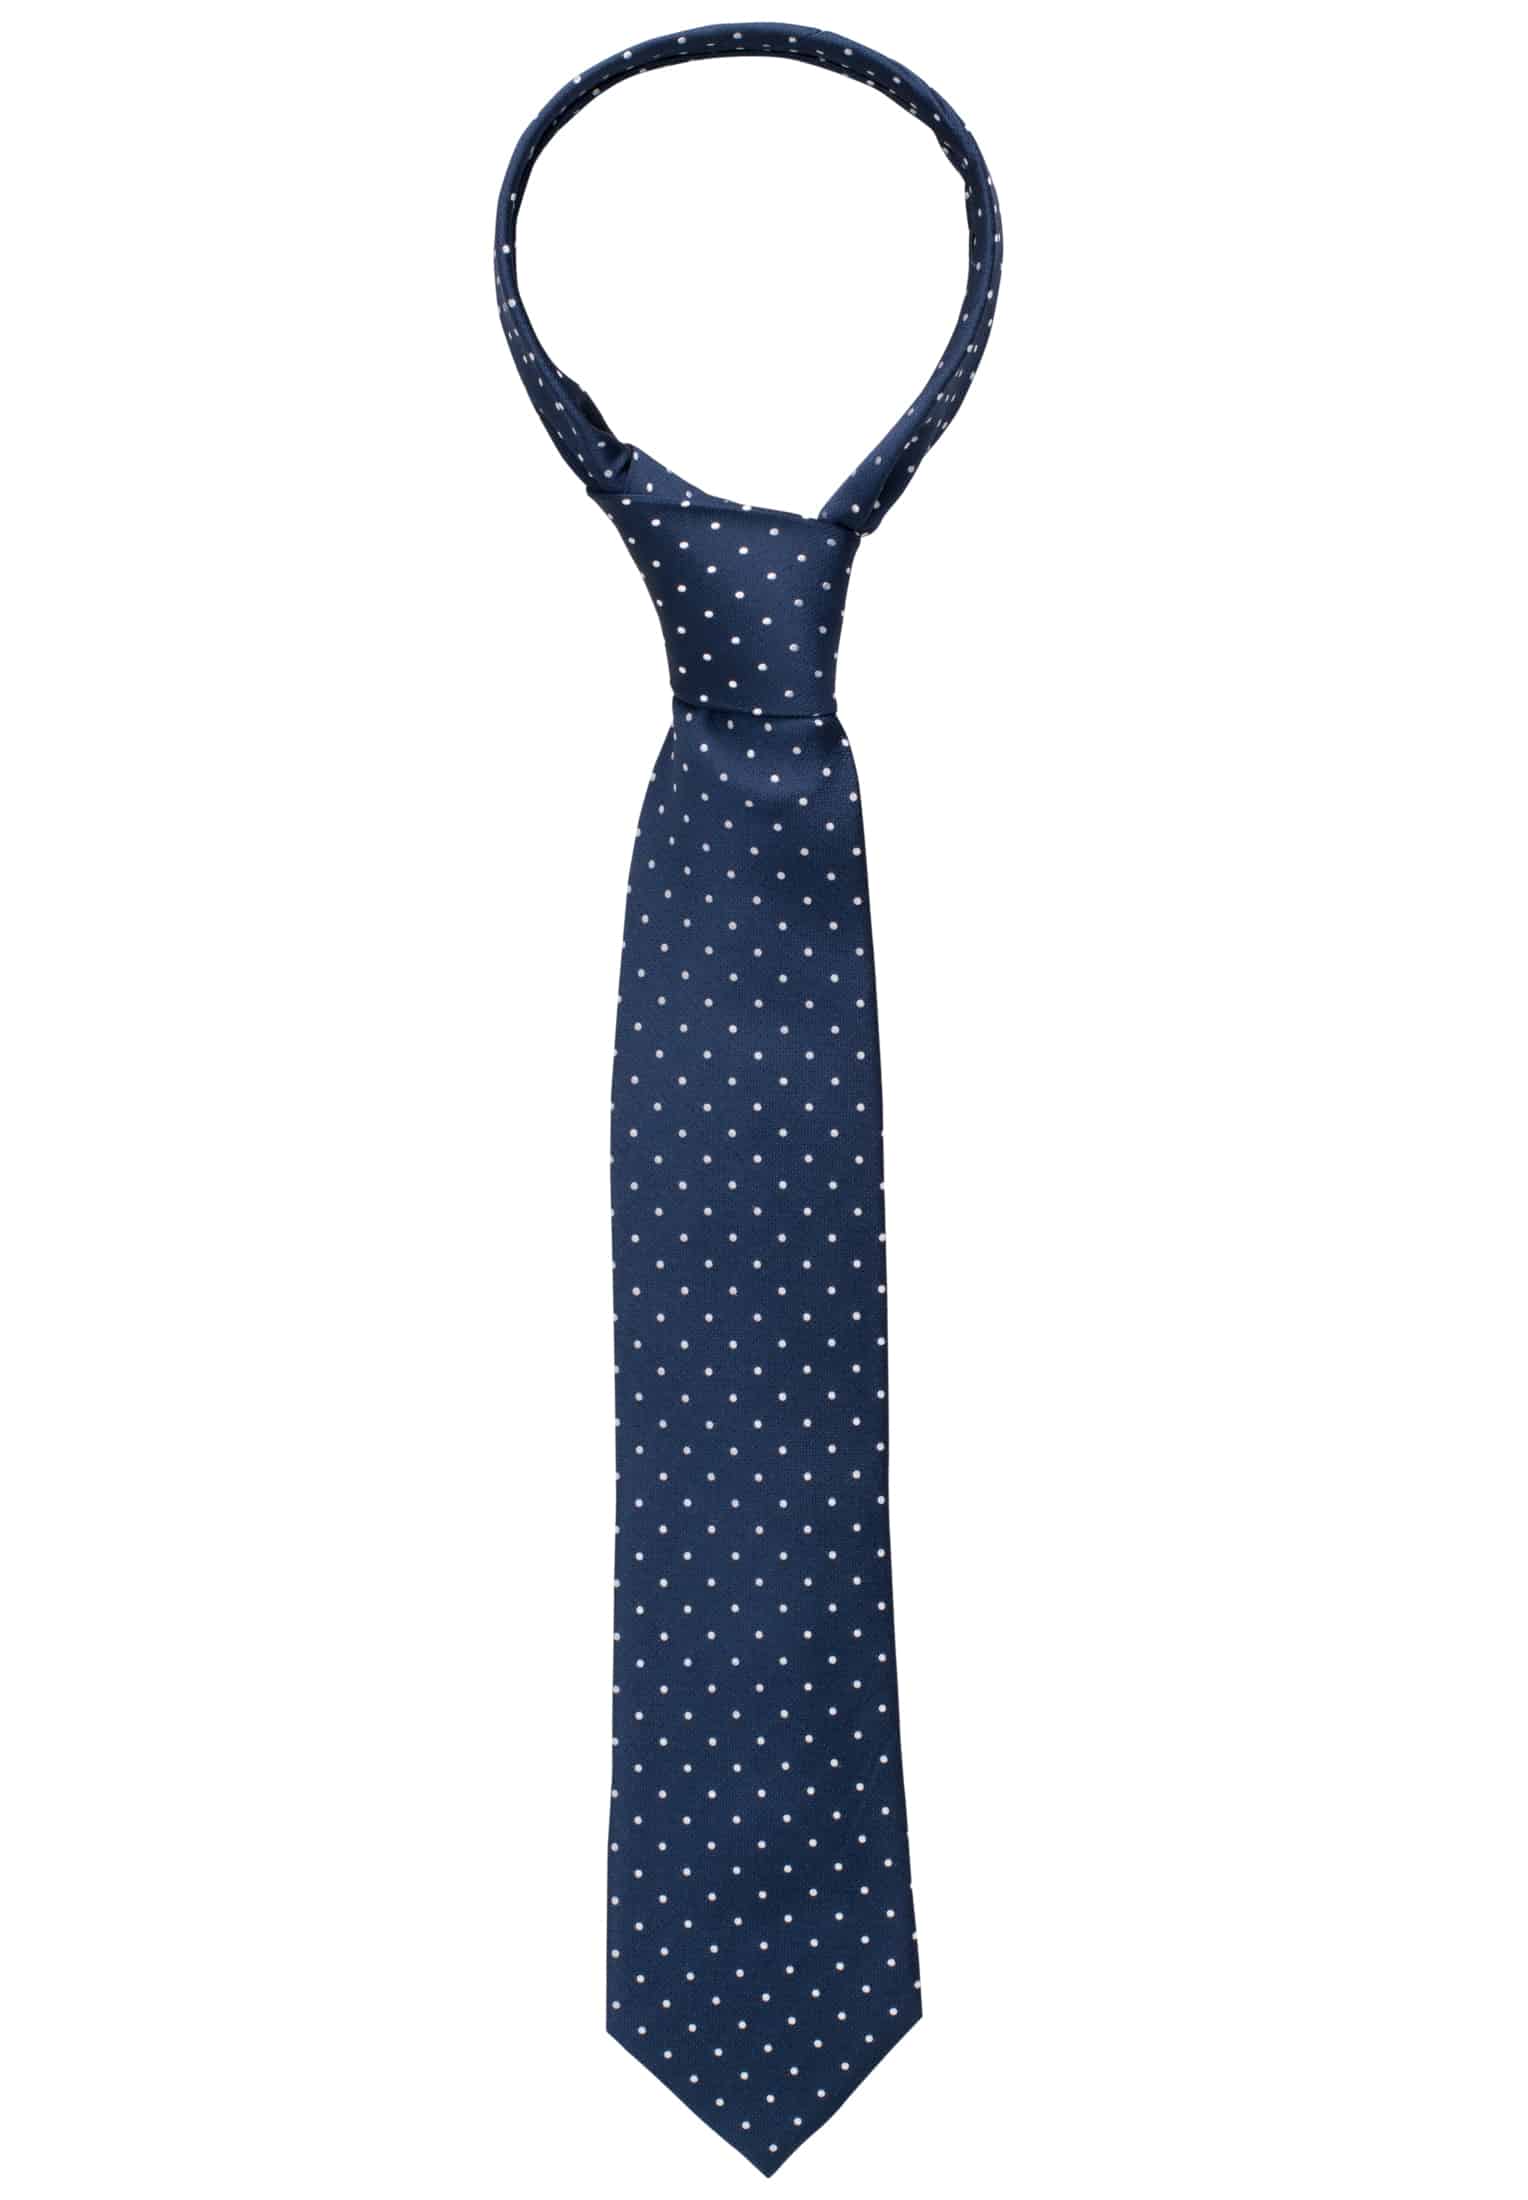 Cravate Bleu marine tacheté